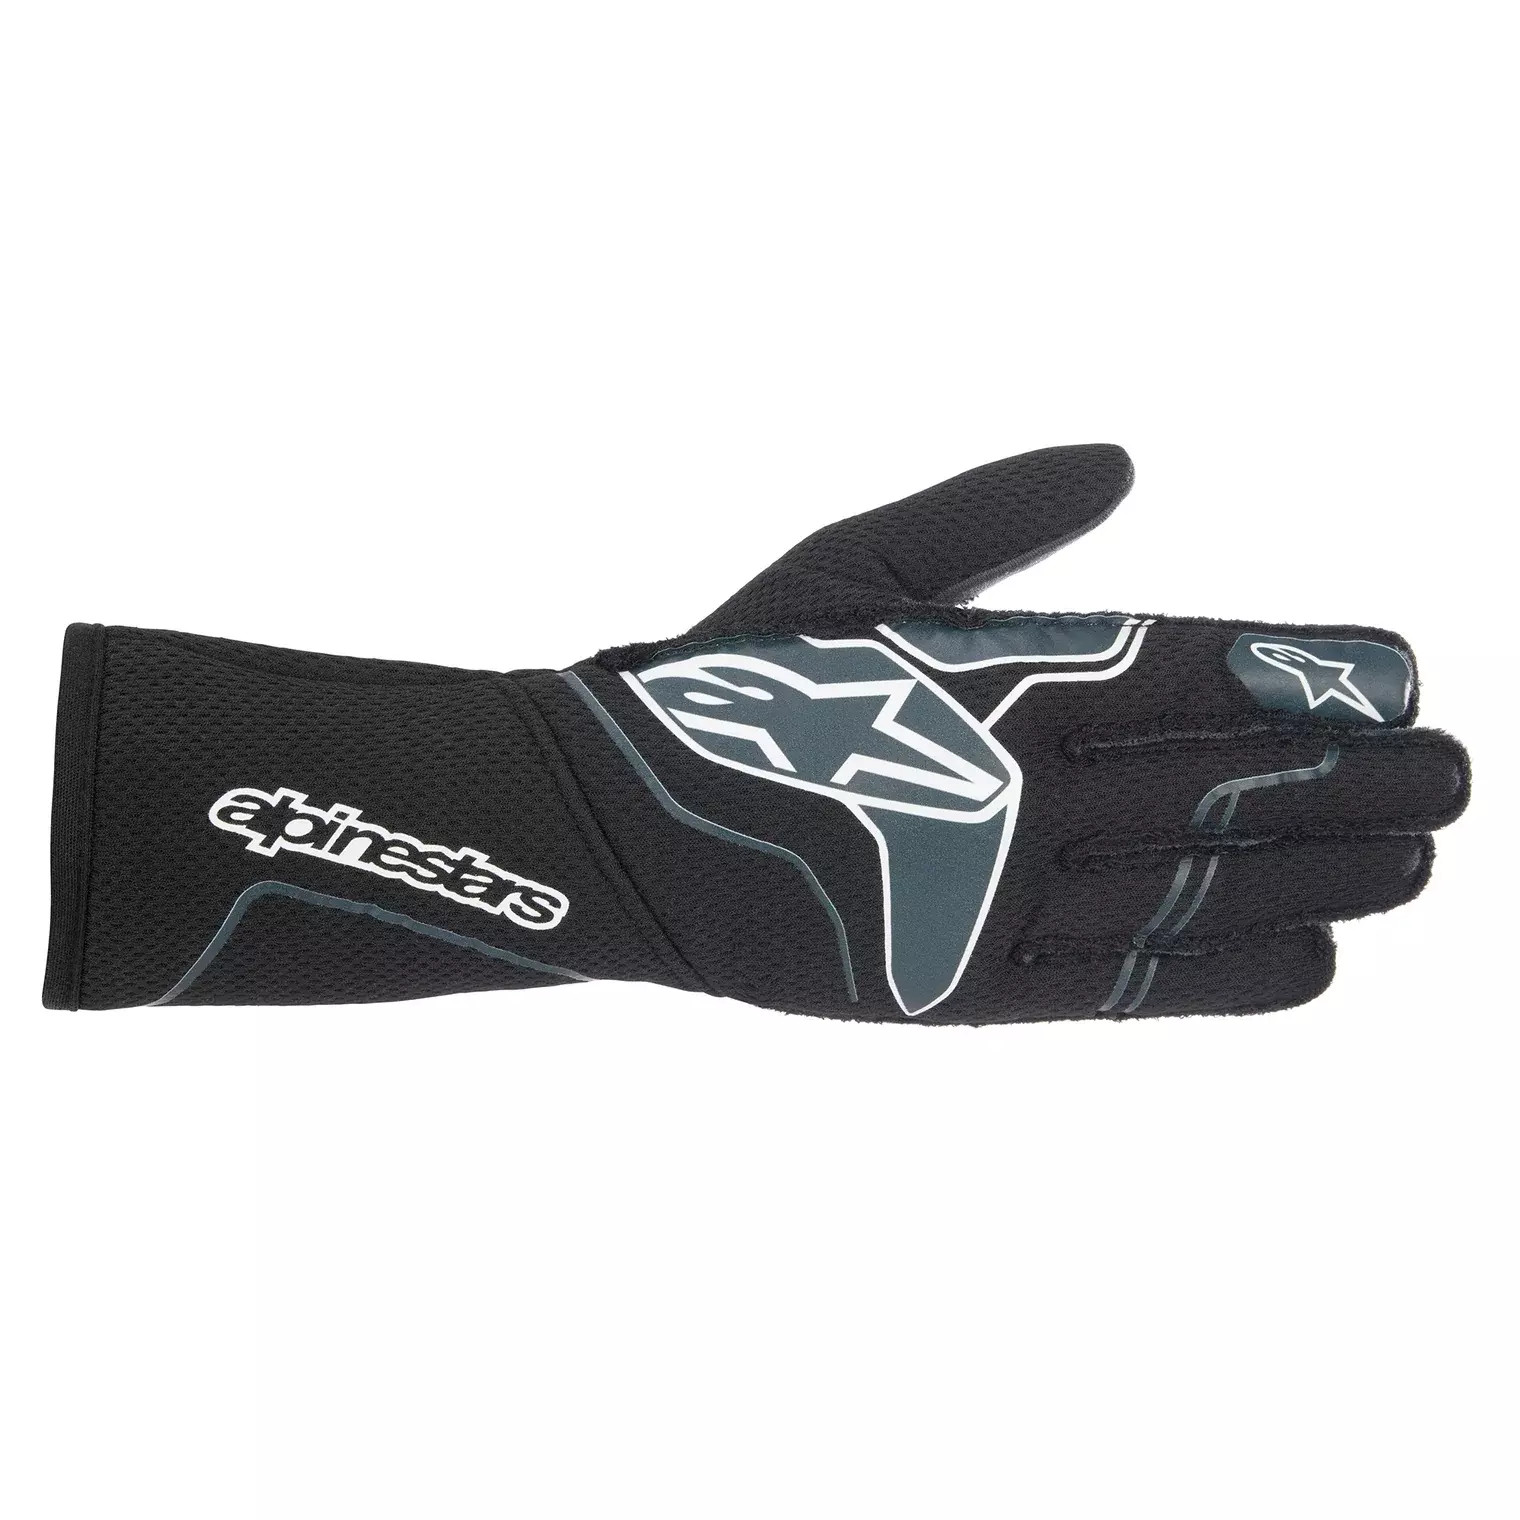 Gloves Tech 1-ZX Black / Grey Small - 3550323-104-S